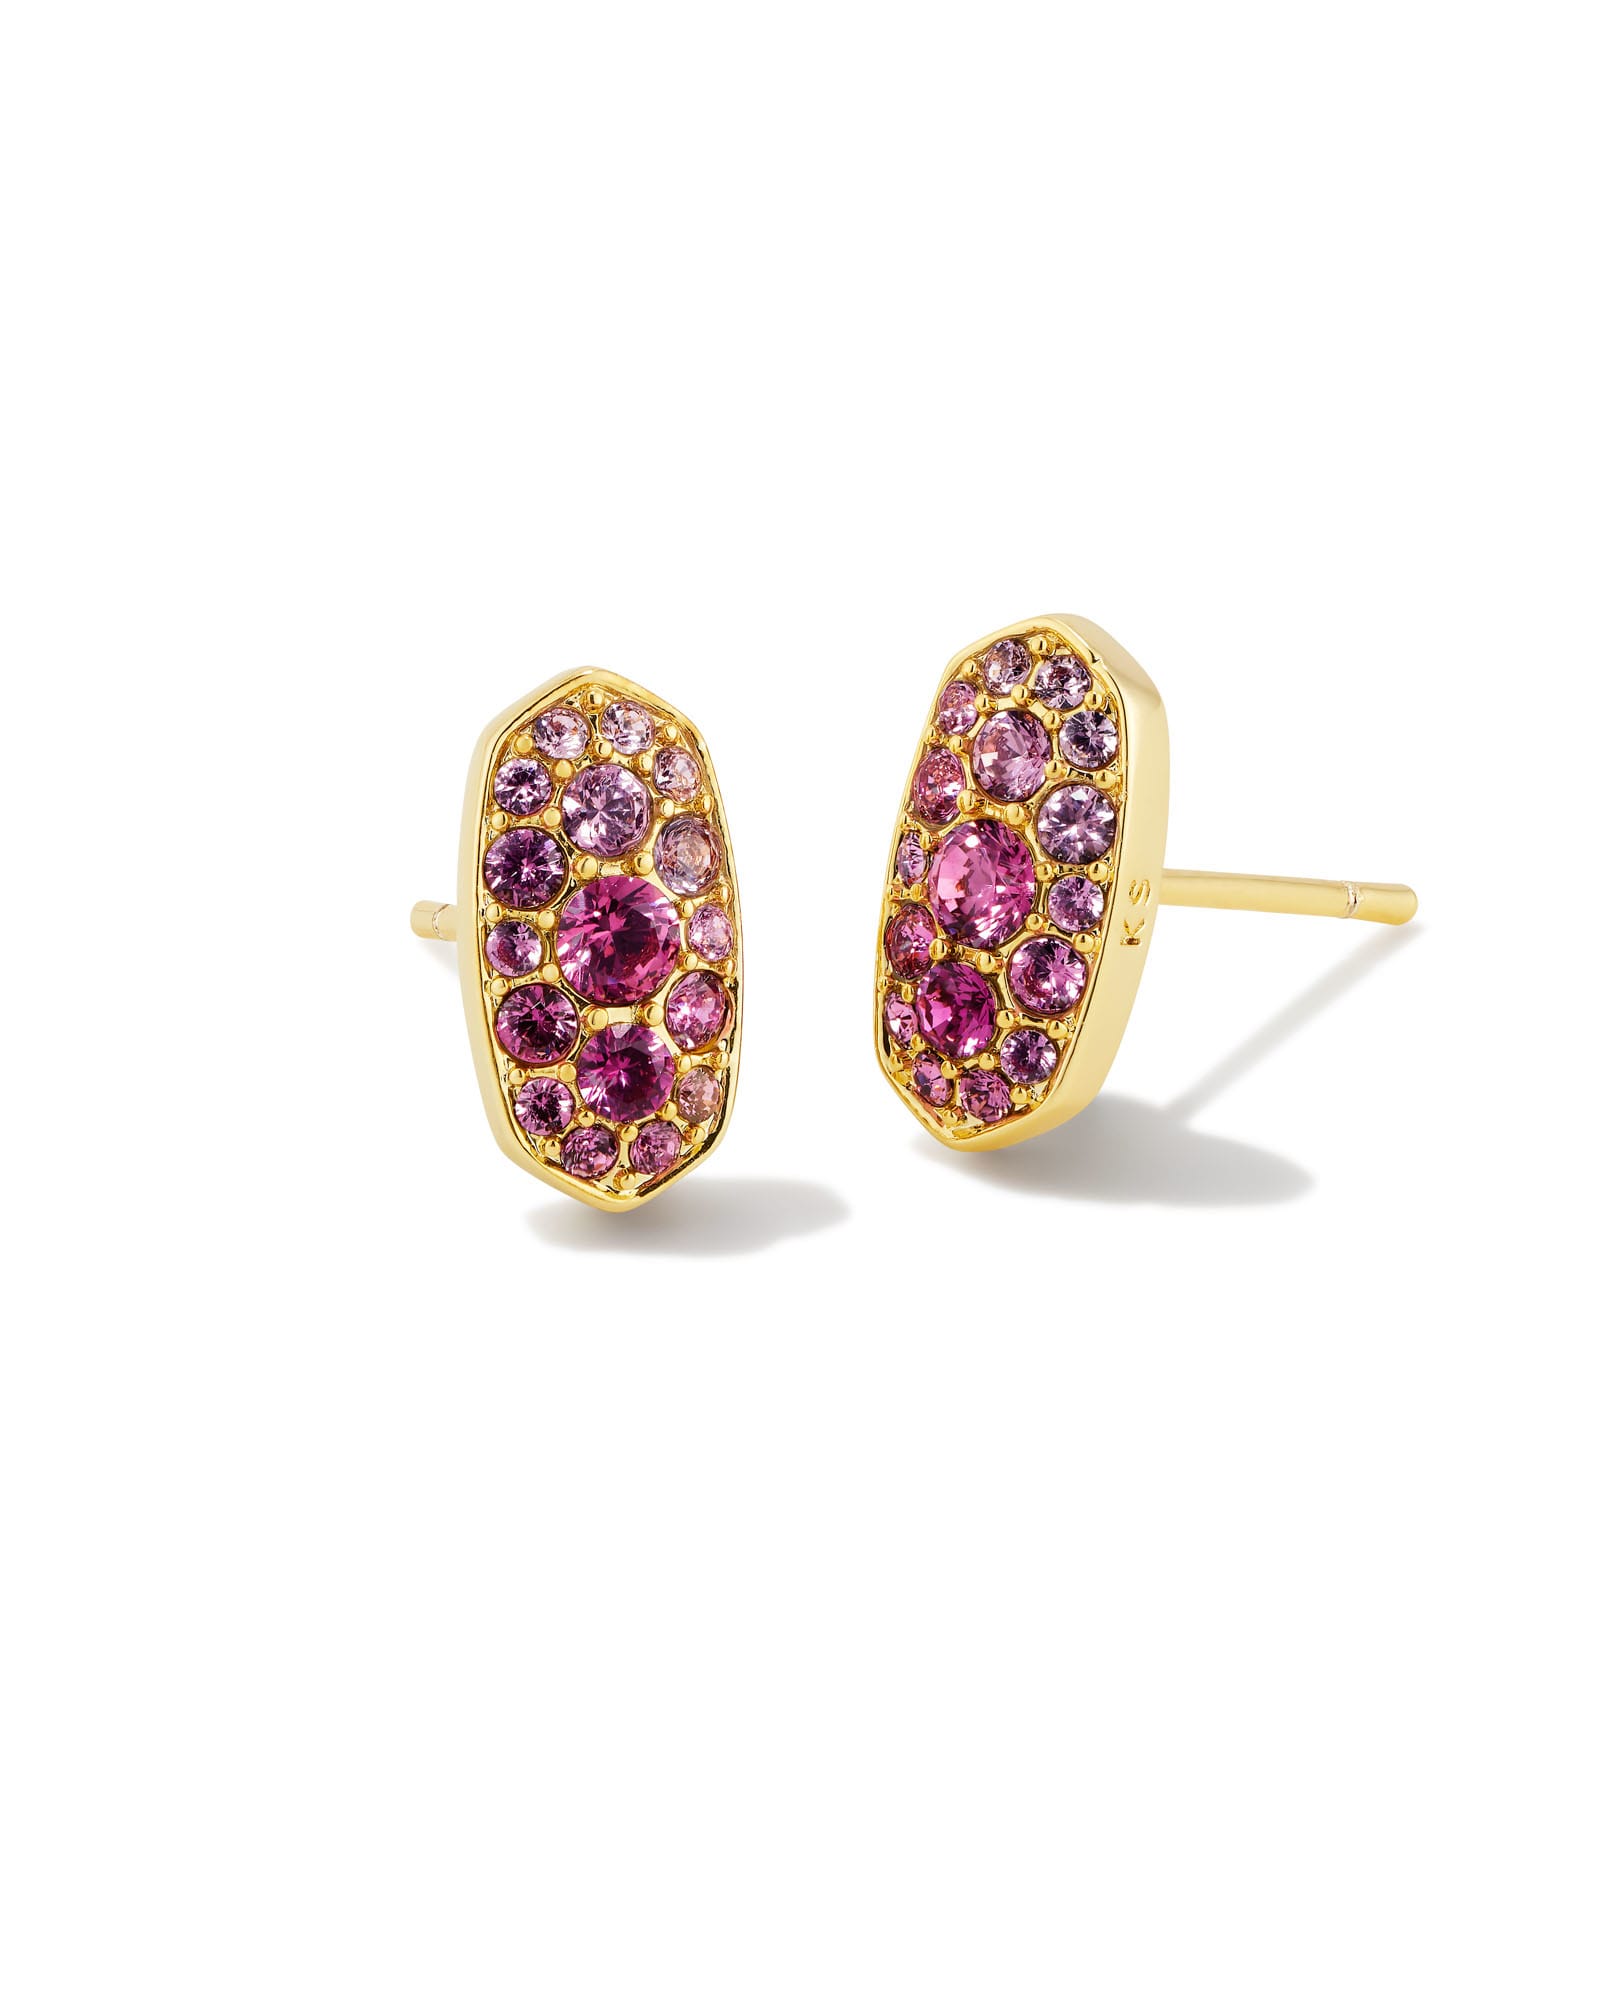 Grayson Gold Crystal Stud Earrings in Pink Ombre | Kendra Scott